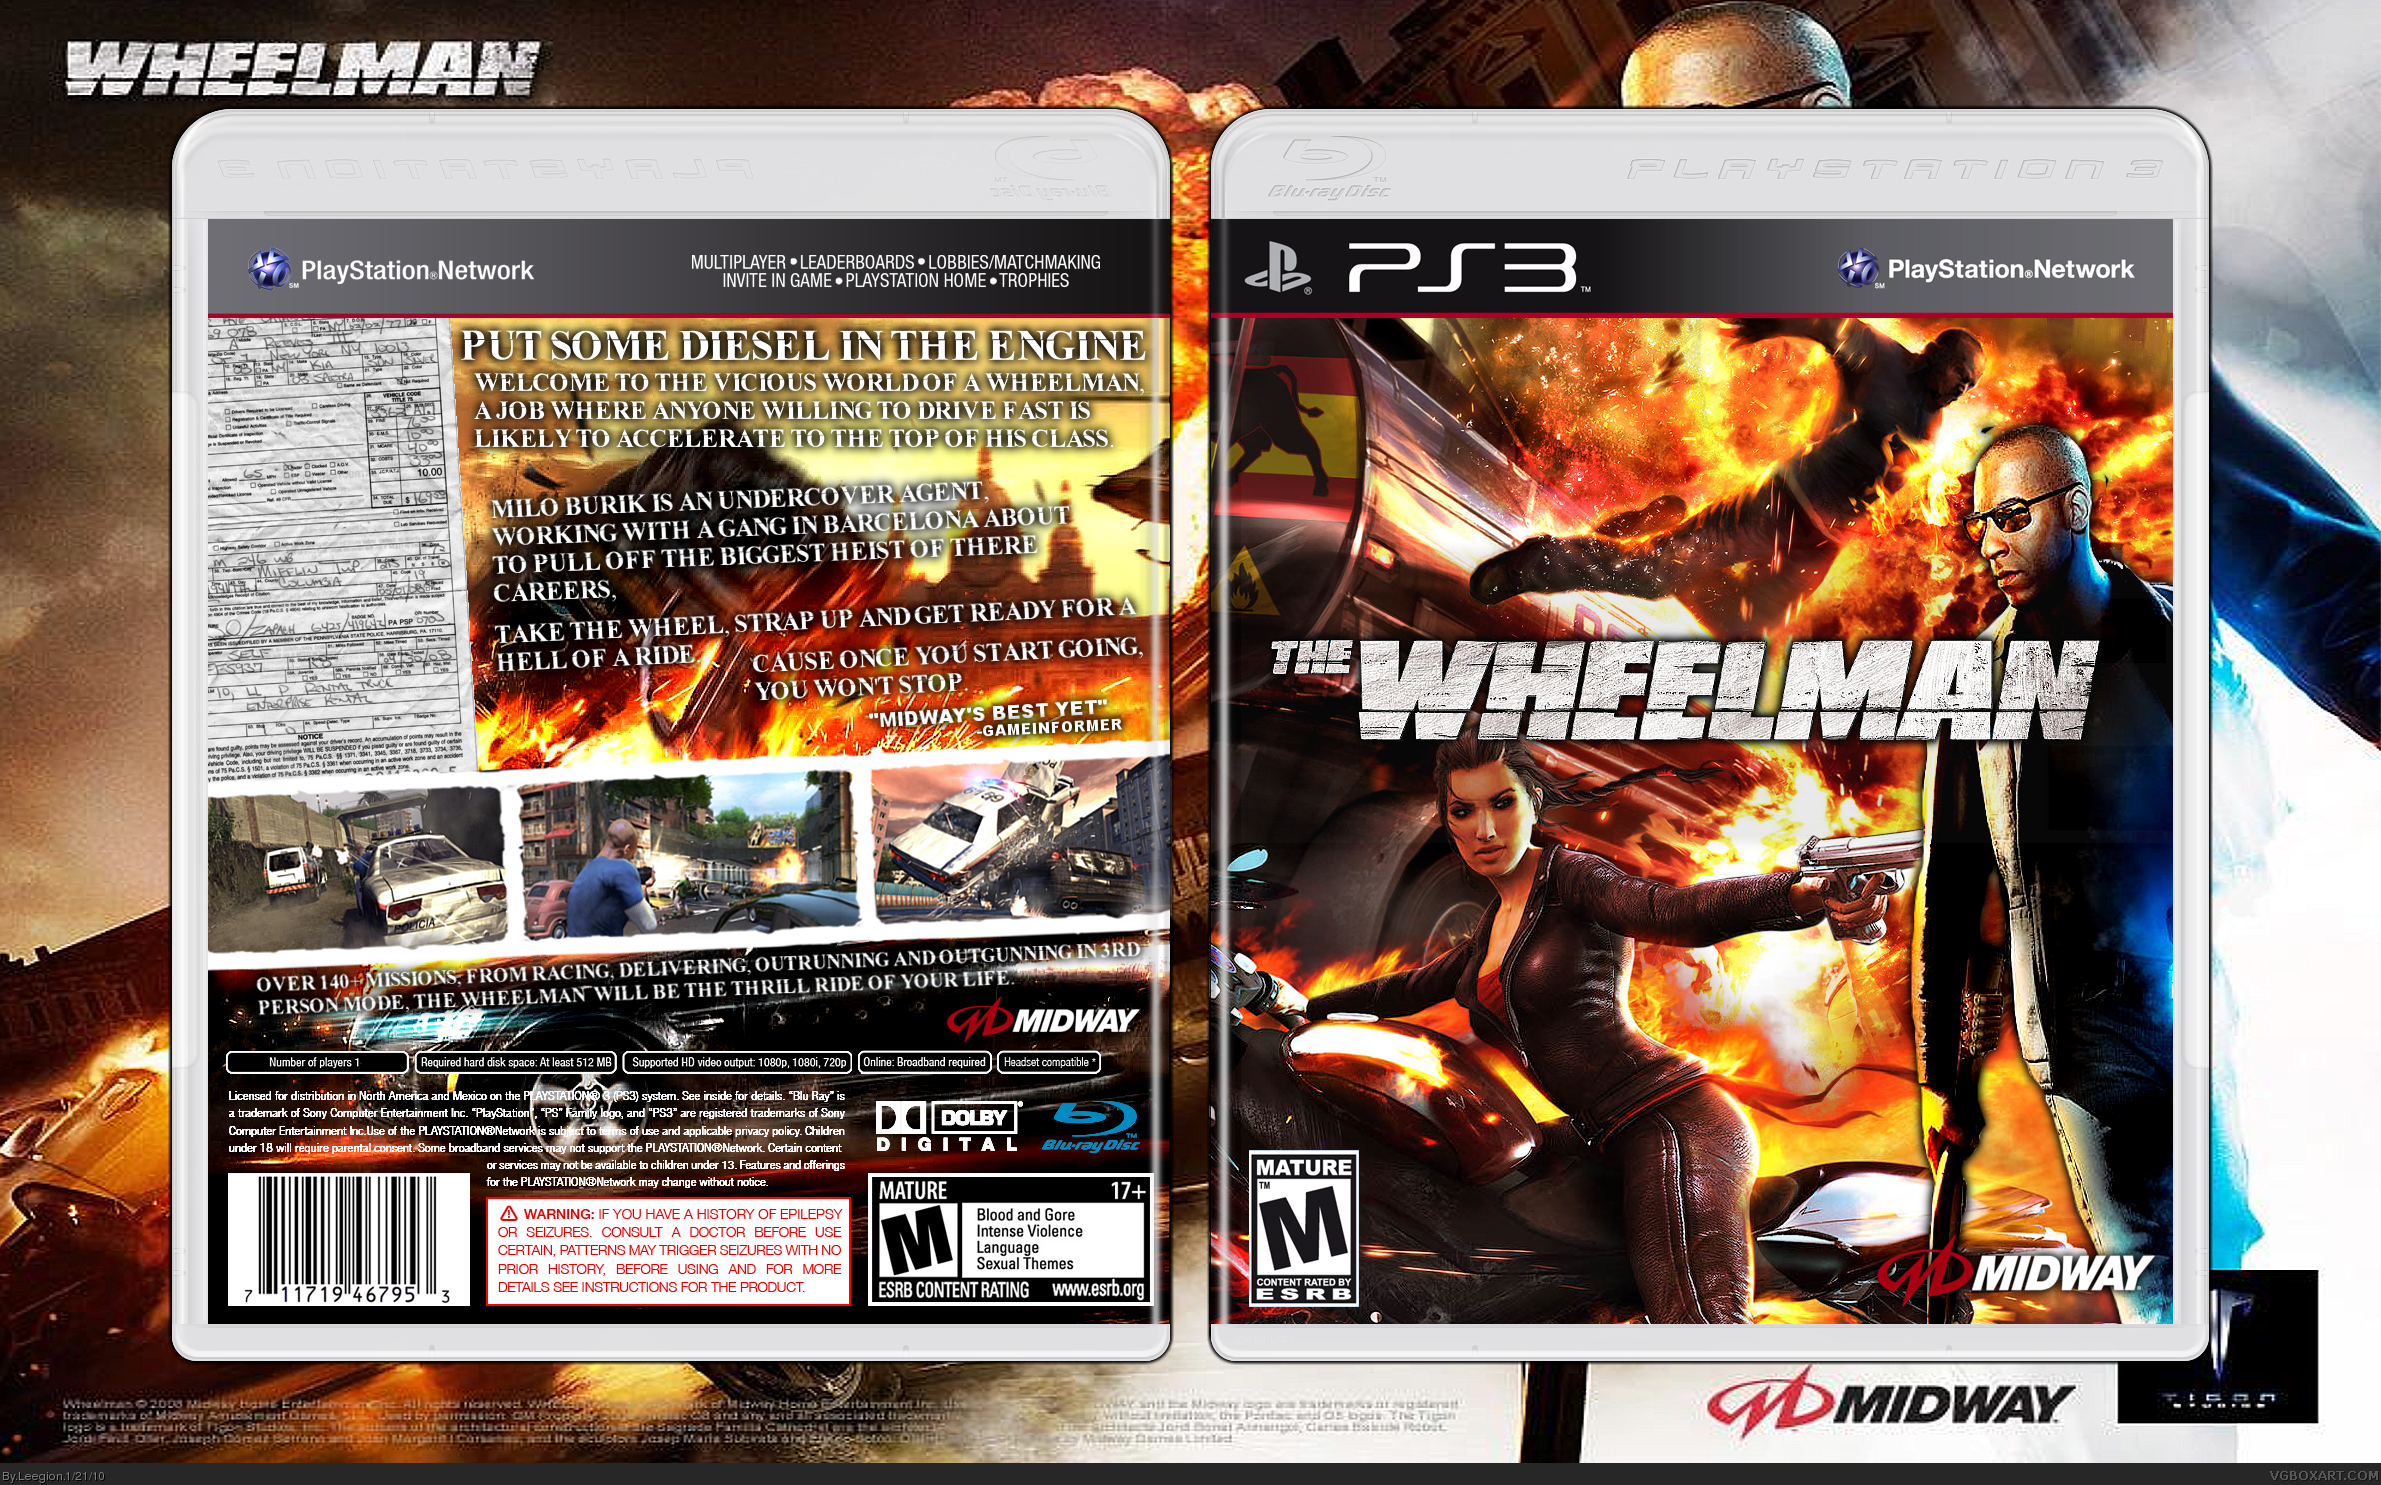 The Wheelman box cover